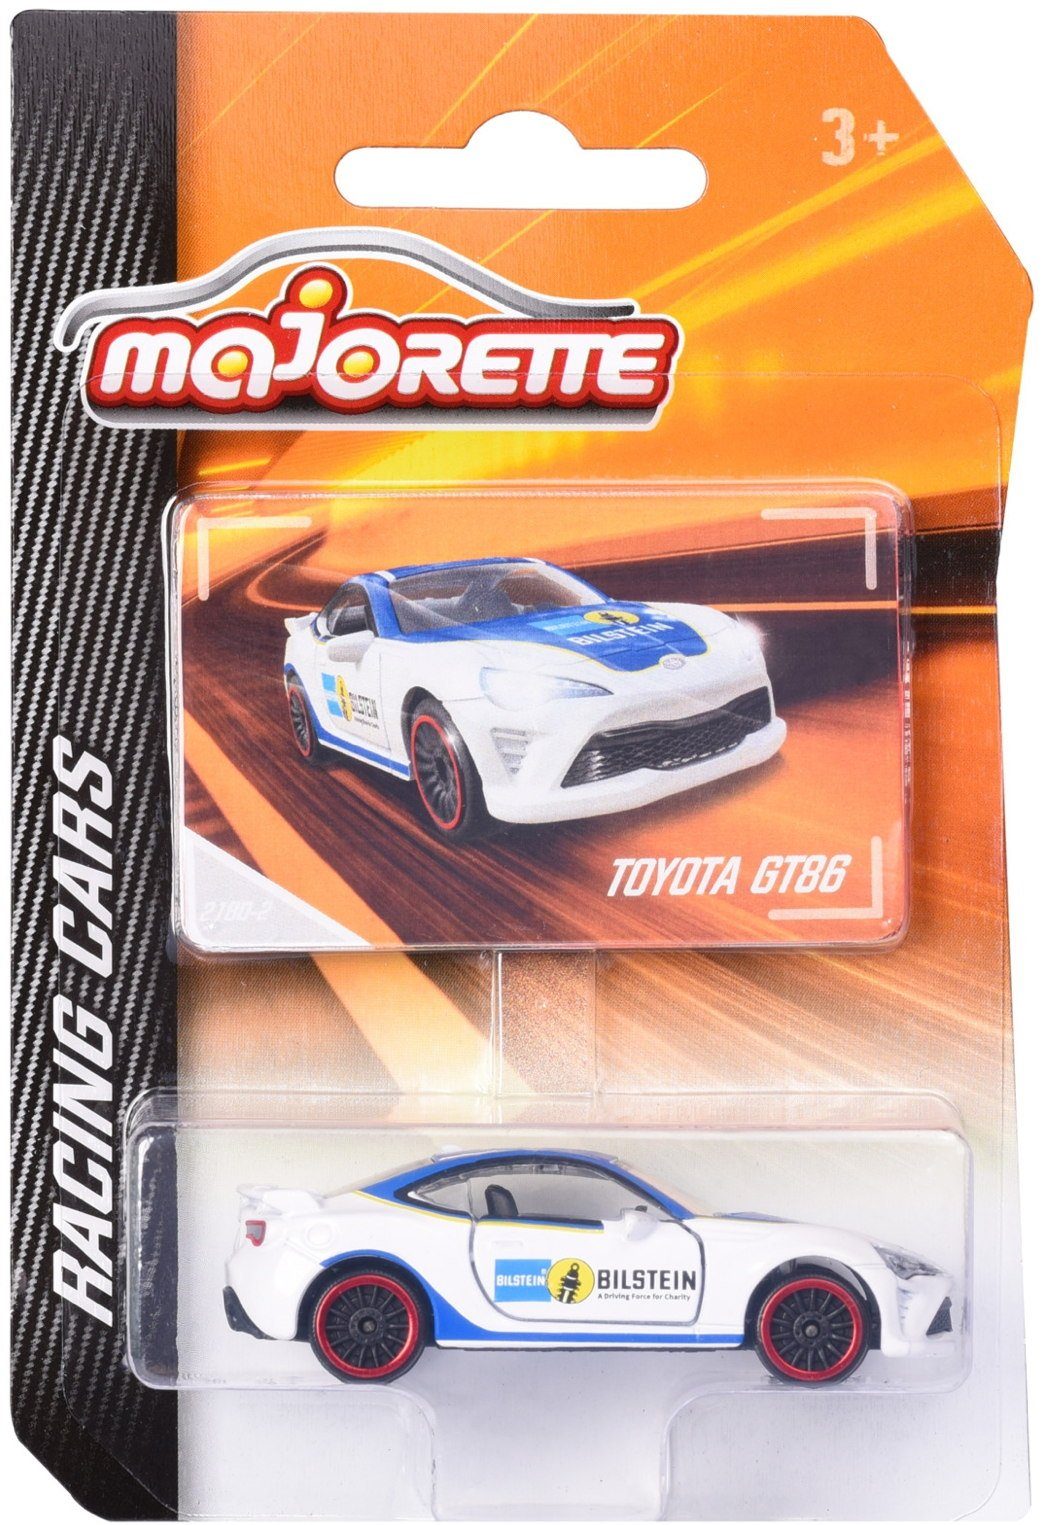 majORETTE Spielzeug-Auto Spielzeugauto Racing Cars Toyota GT86 Bilstein 212084009Q31